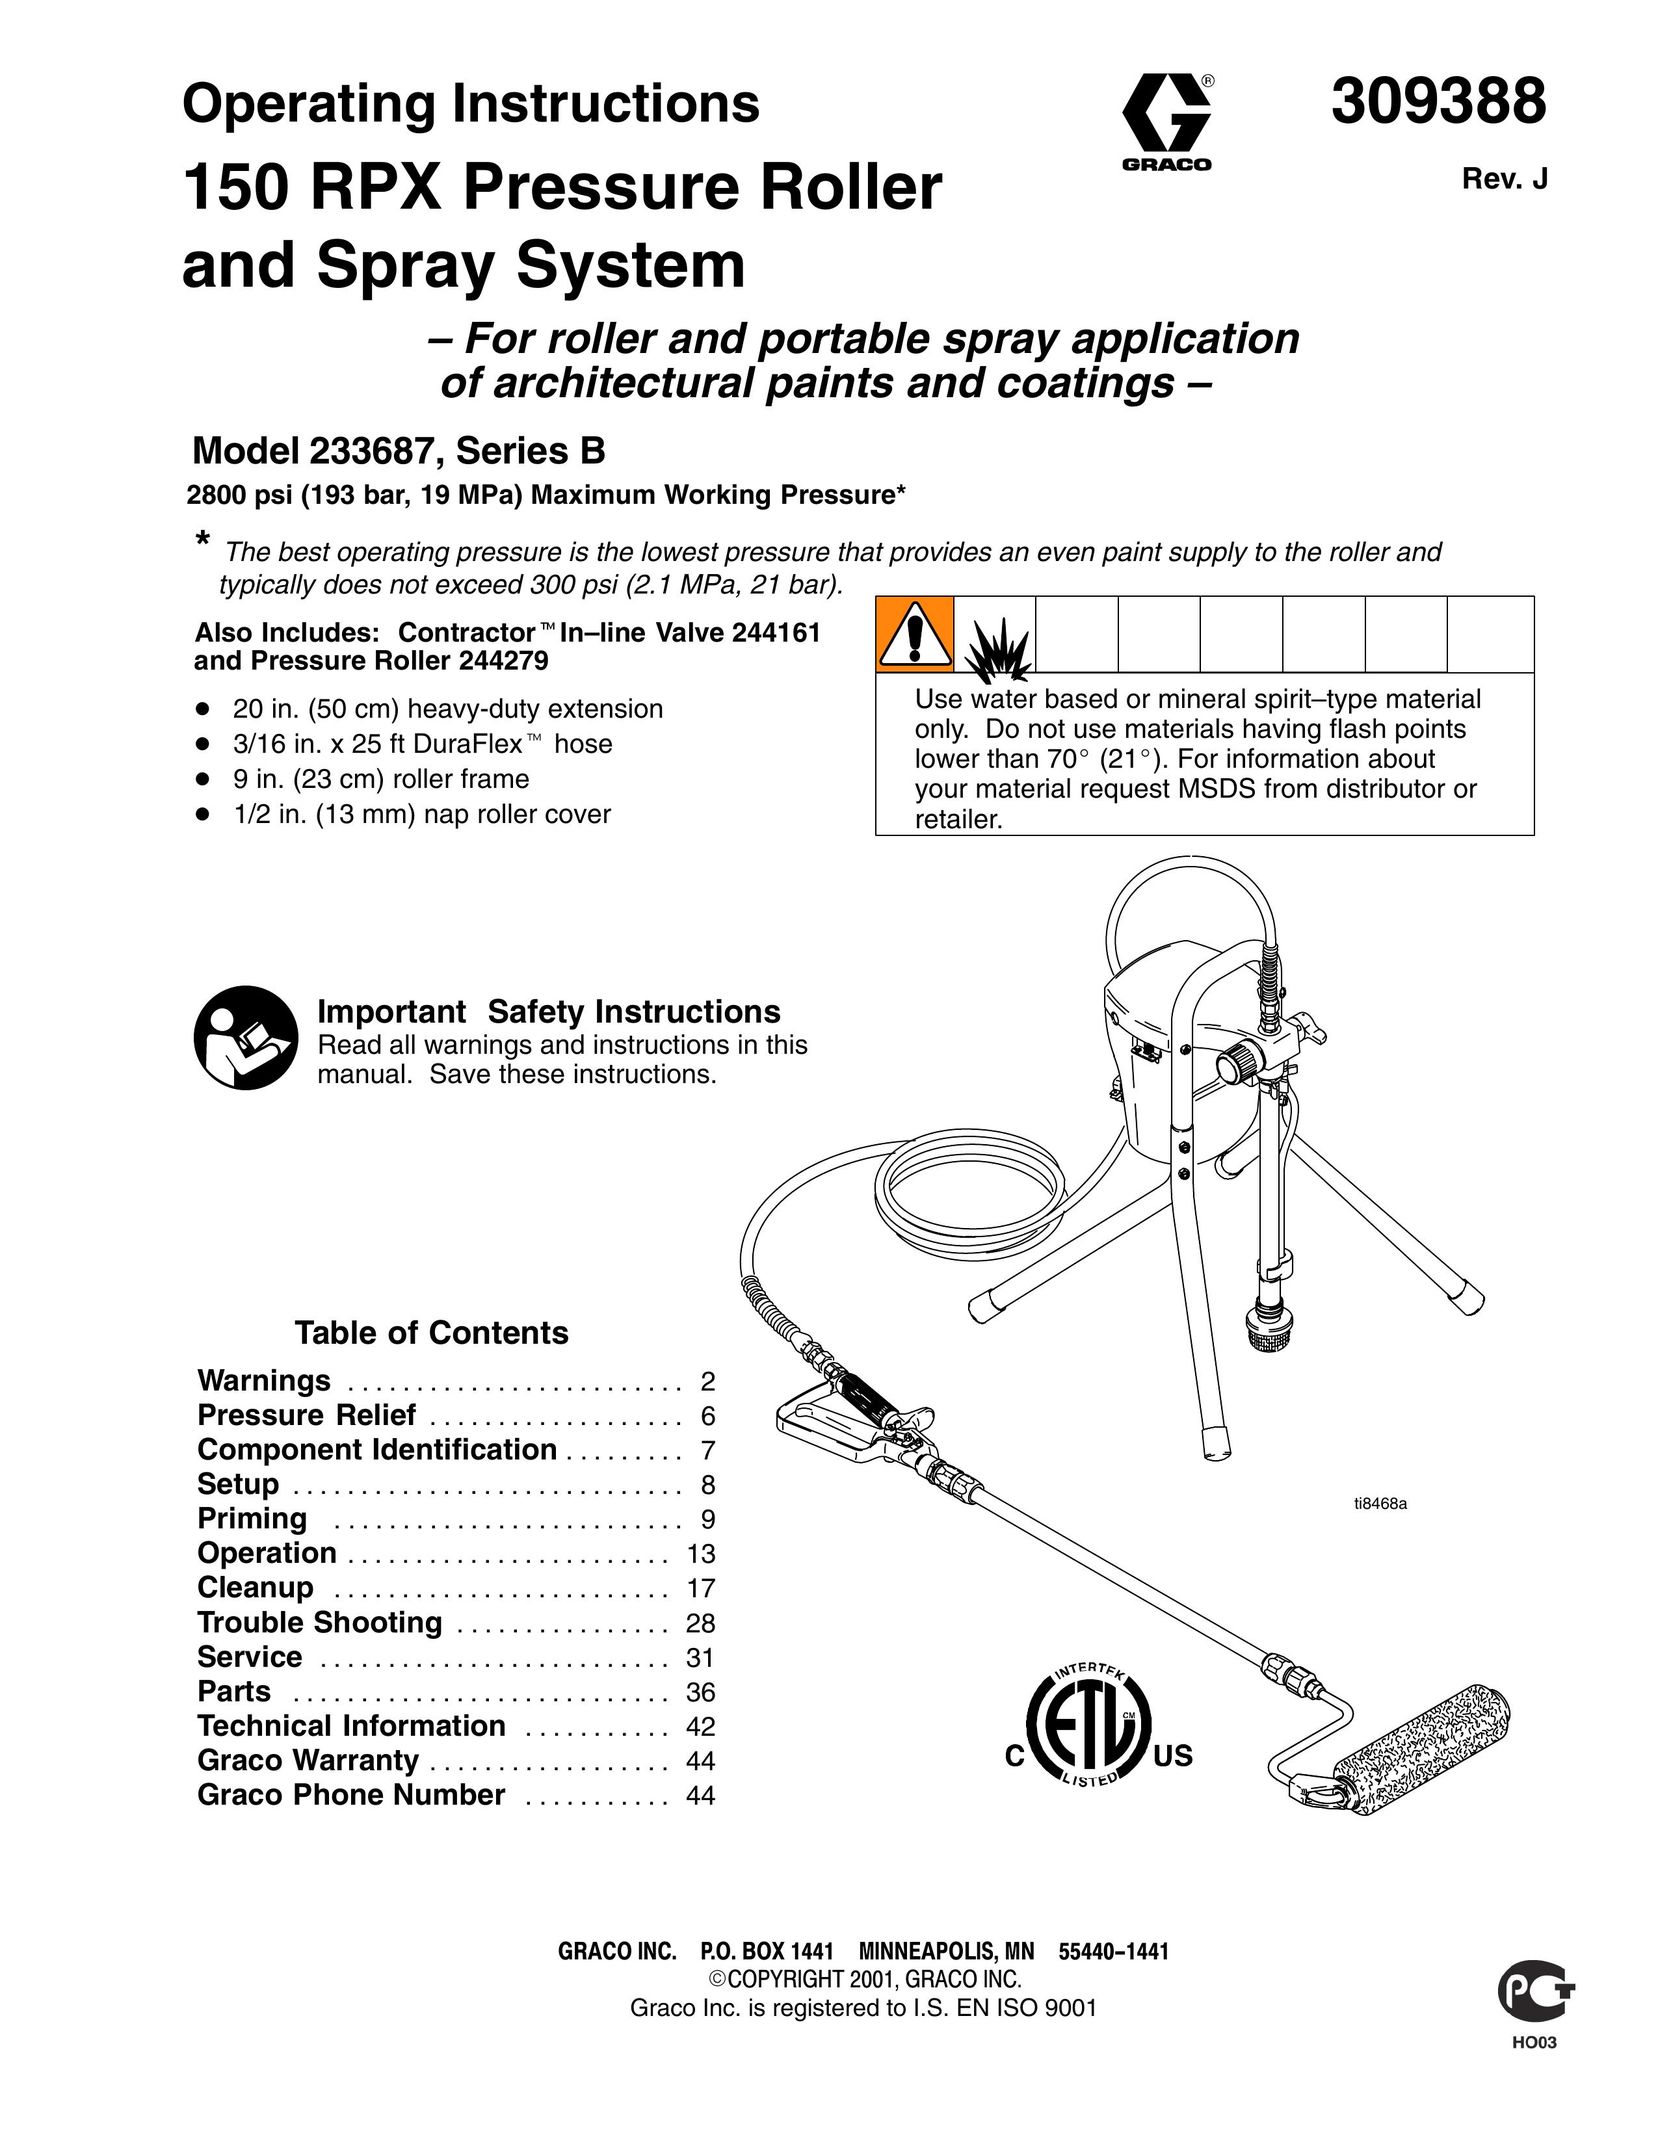 Graco Inc. 309388 Power Roller User Manual